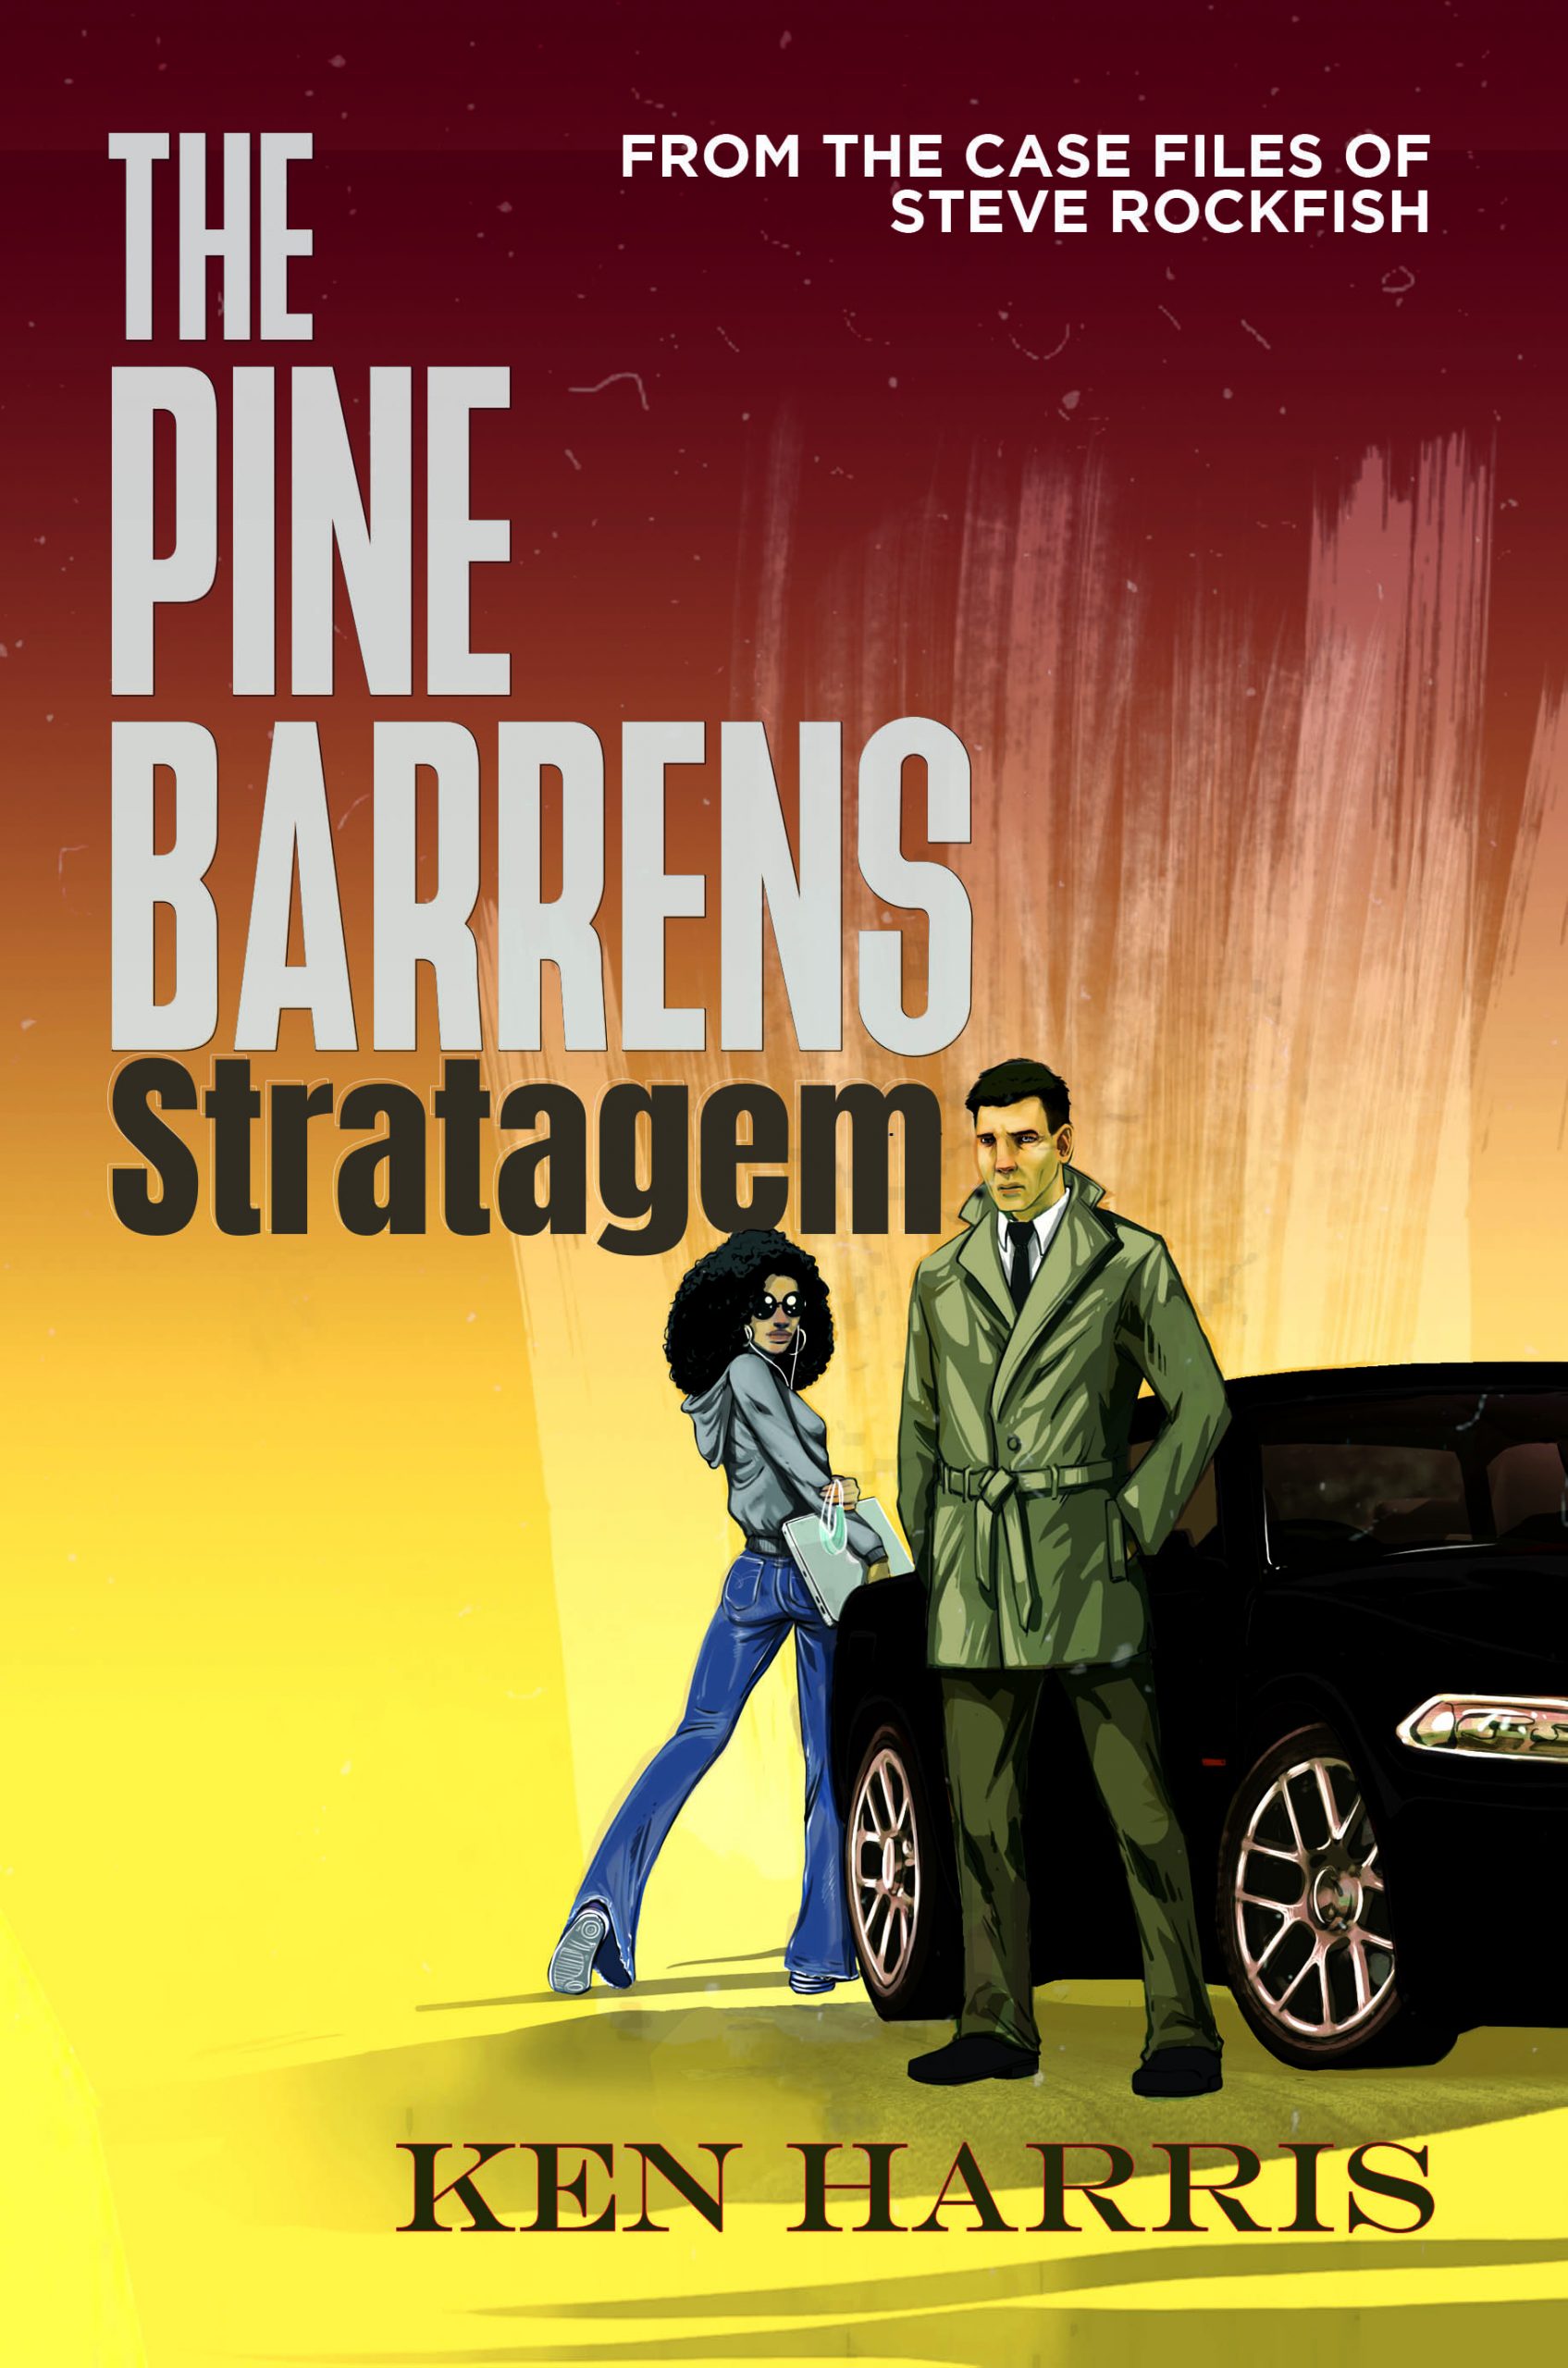 The Pine Barrens Stratagem by Ken Harris